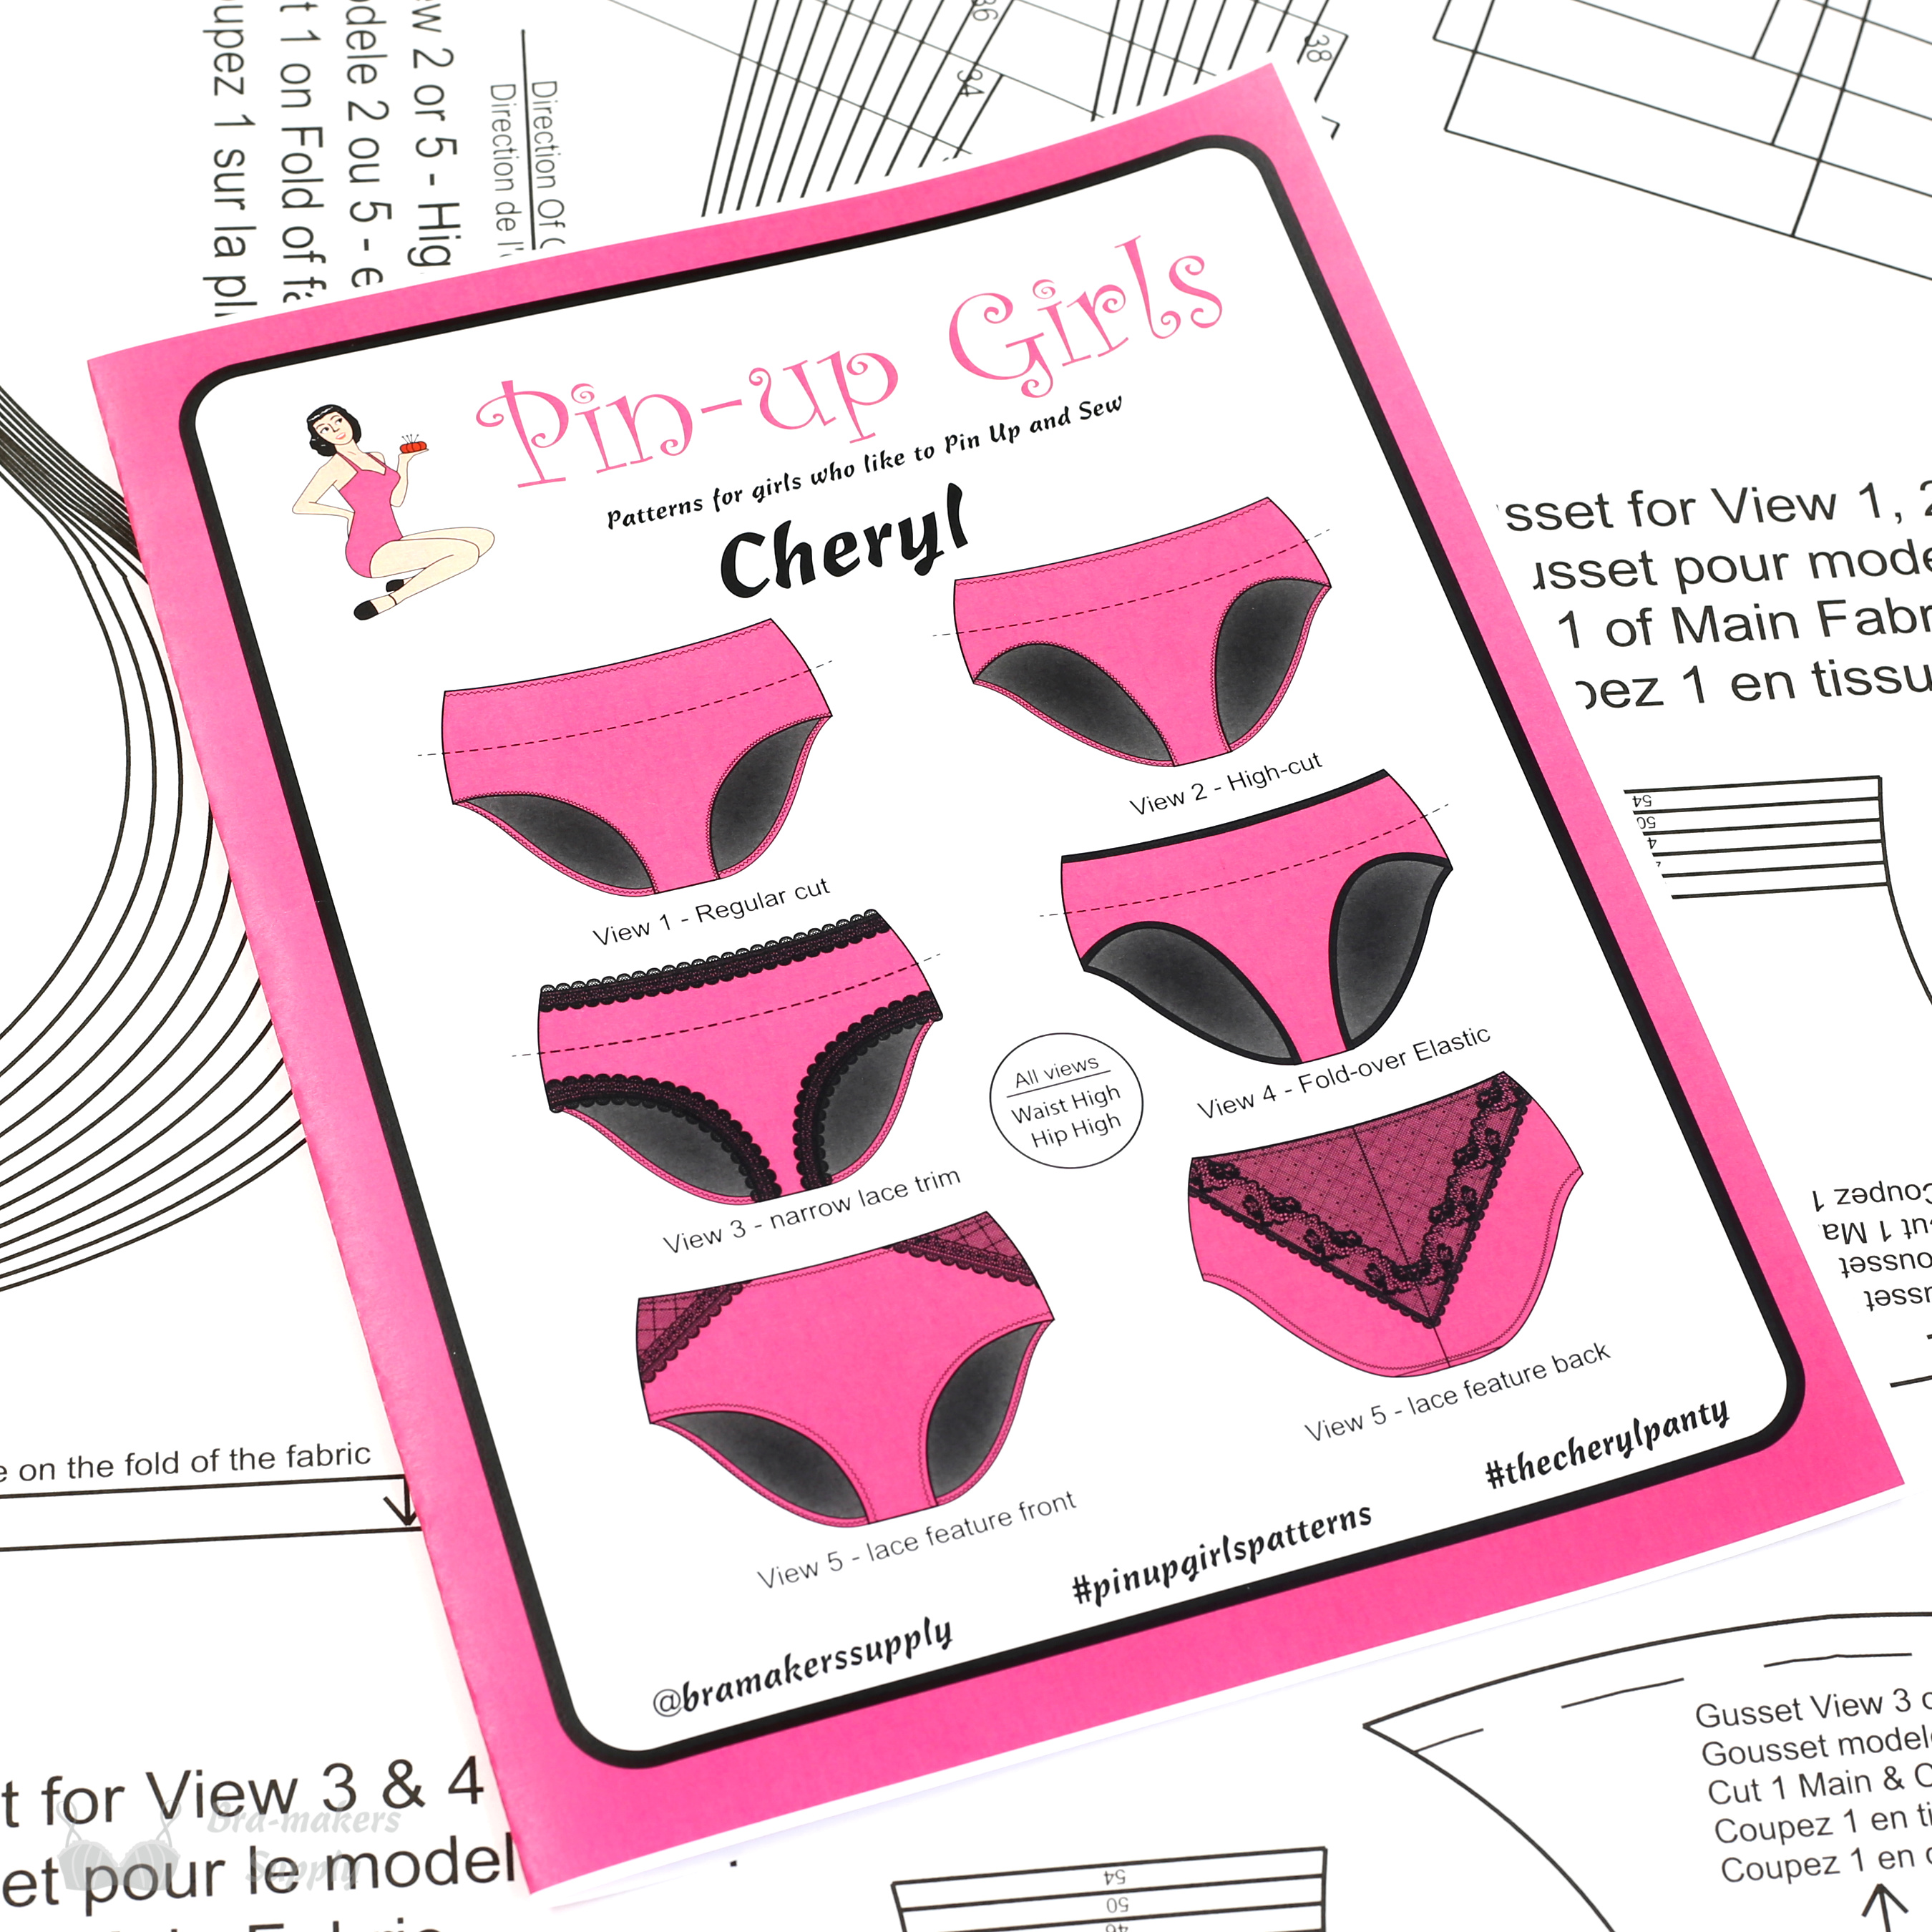 Cheryl Back Seam Panty Pattern A Pin Up Girls Pattern By Bra Makers